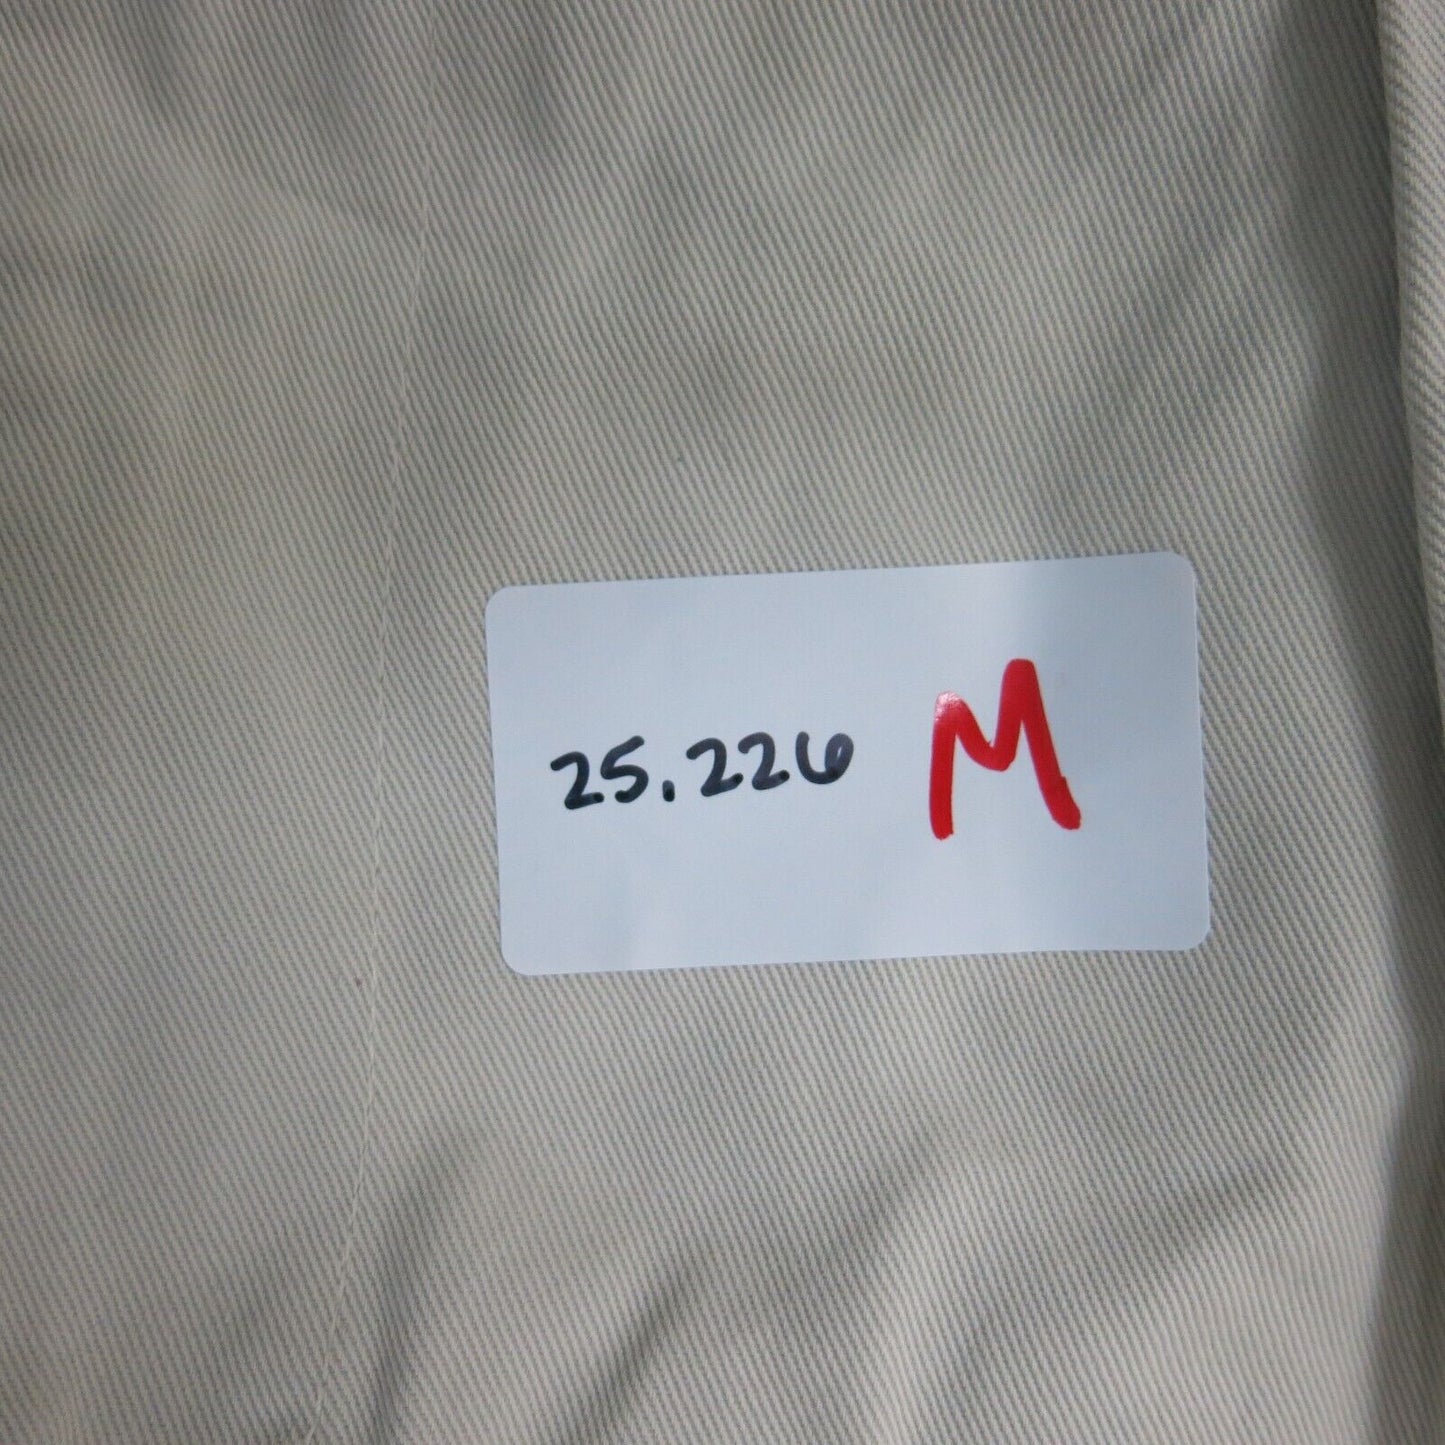 Polo By Ralph Lauren Mens Dress Pants 100% Cotton Mid Rise White Size W32XL36